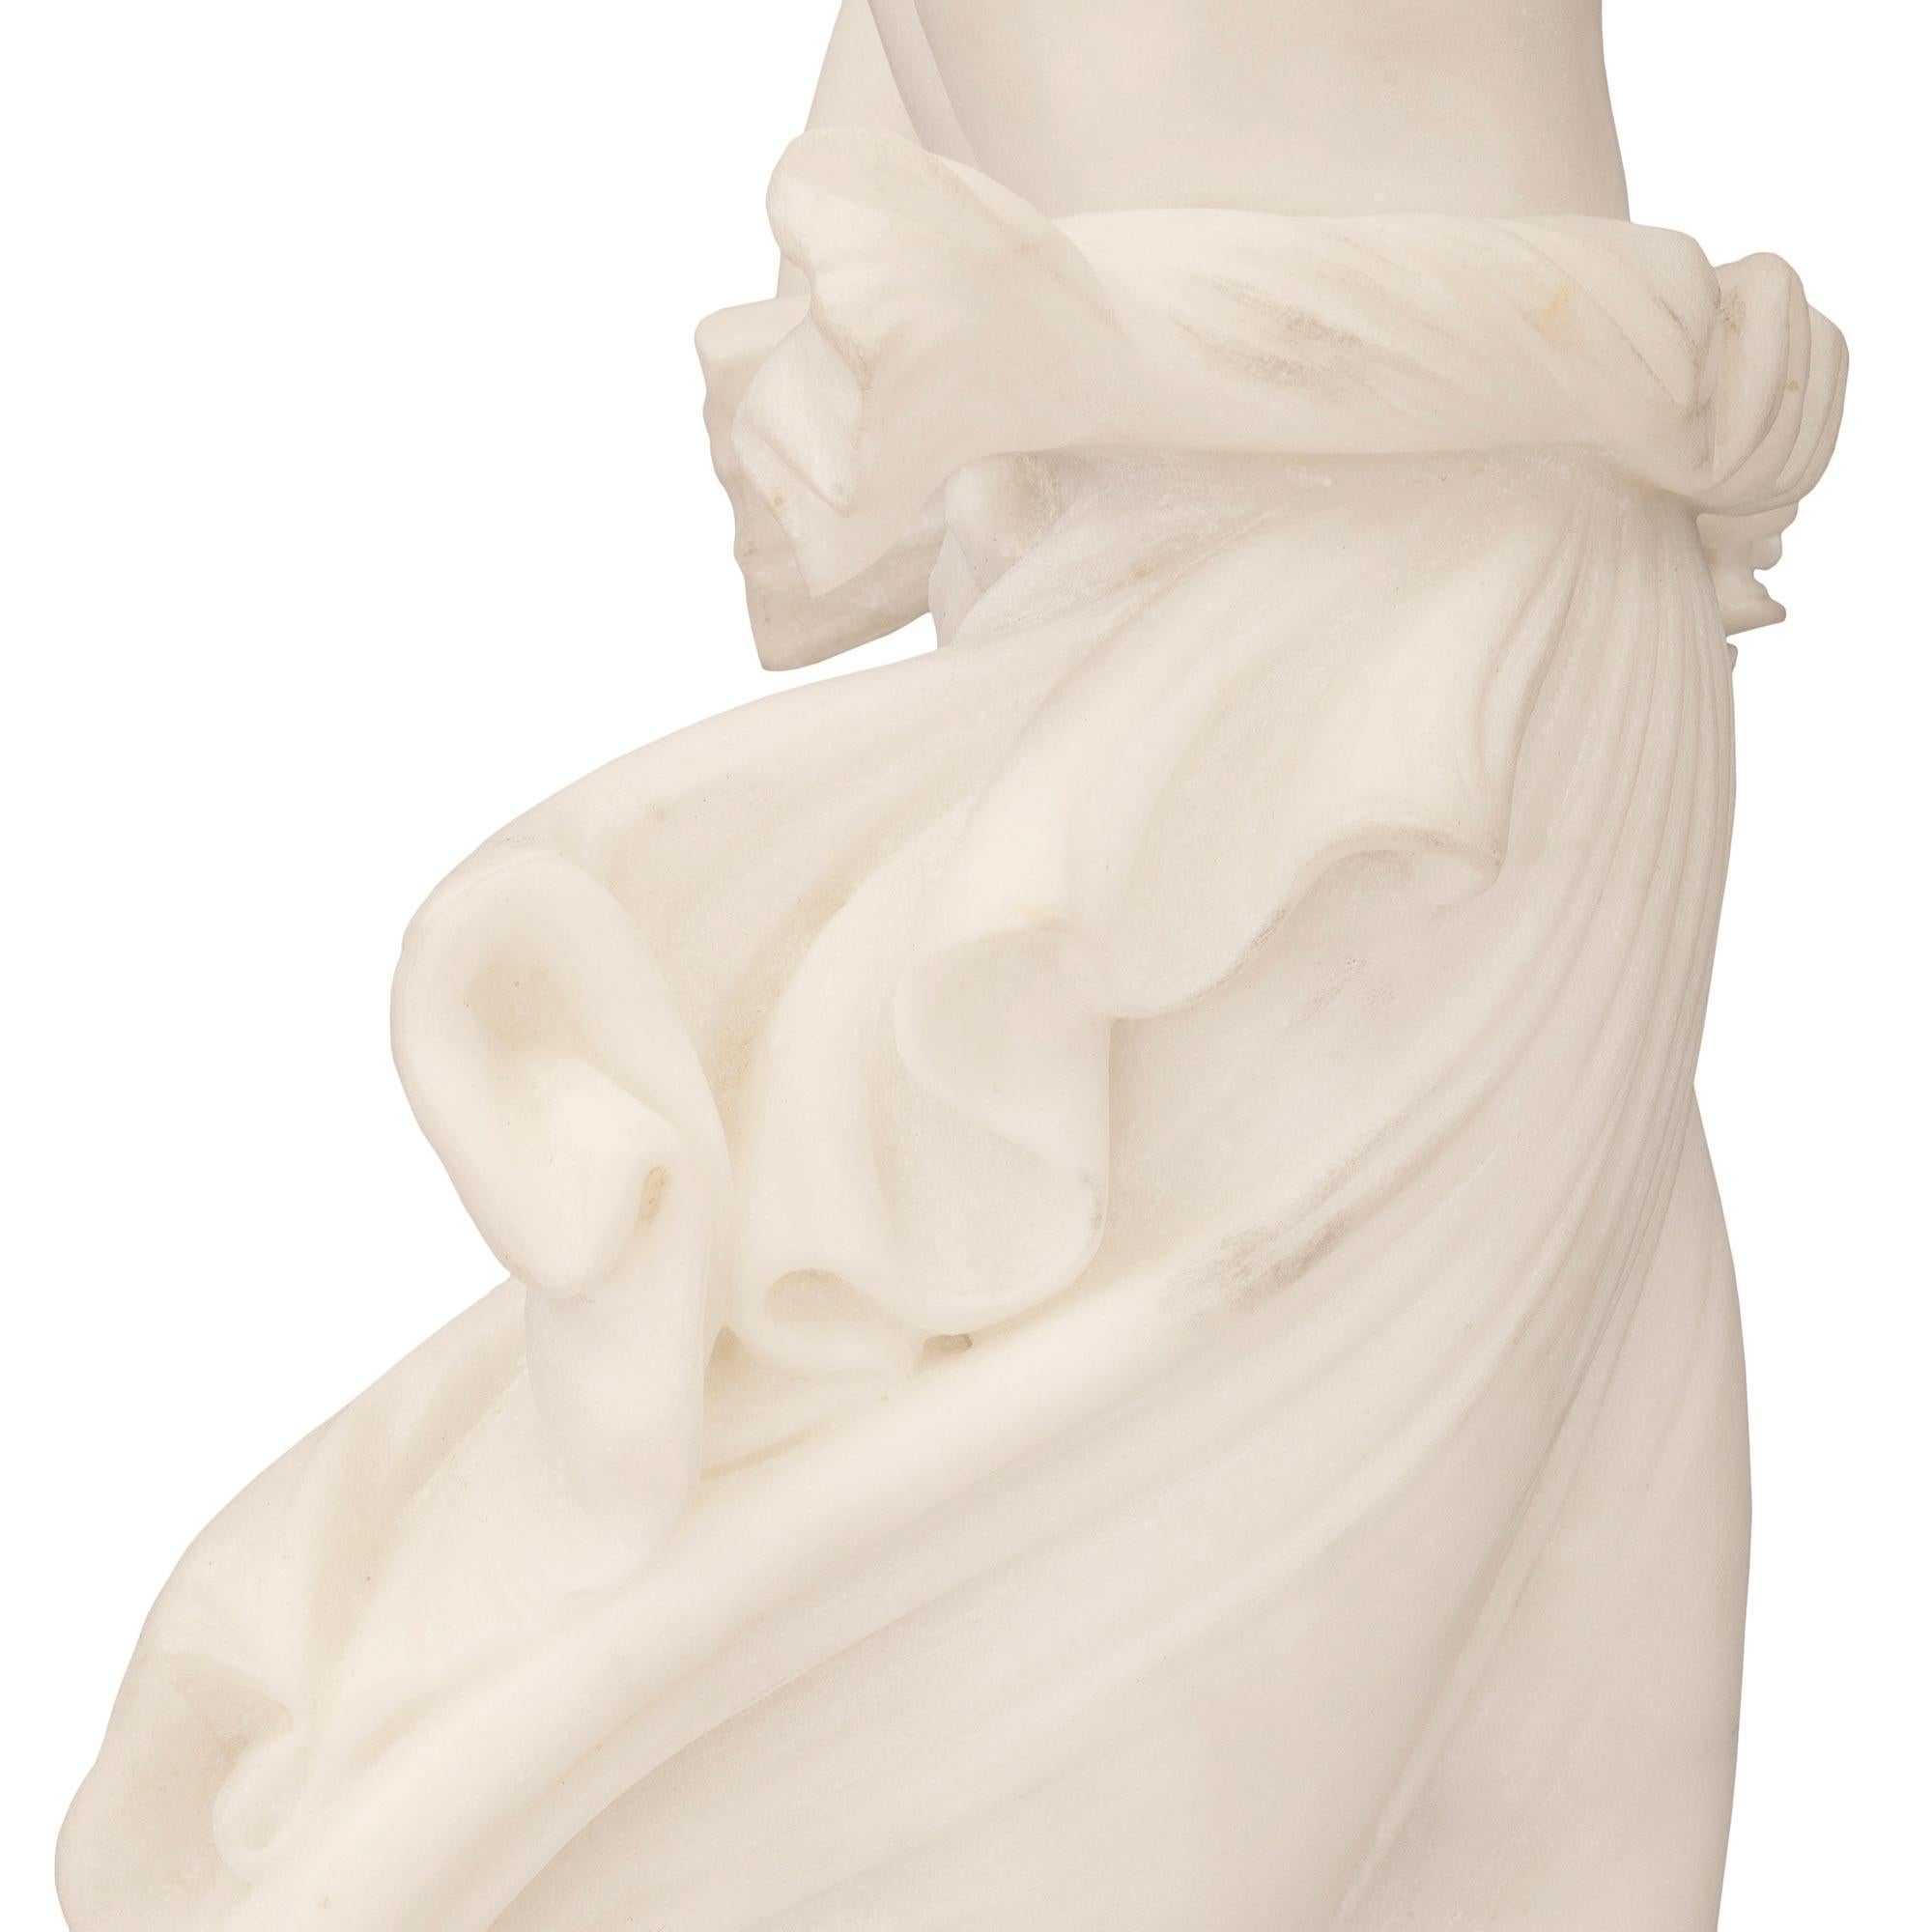 Italian 19th Century White Carrara Marble Statue of Hebe For Sale 4